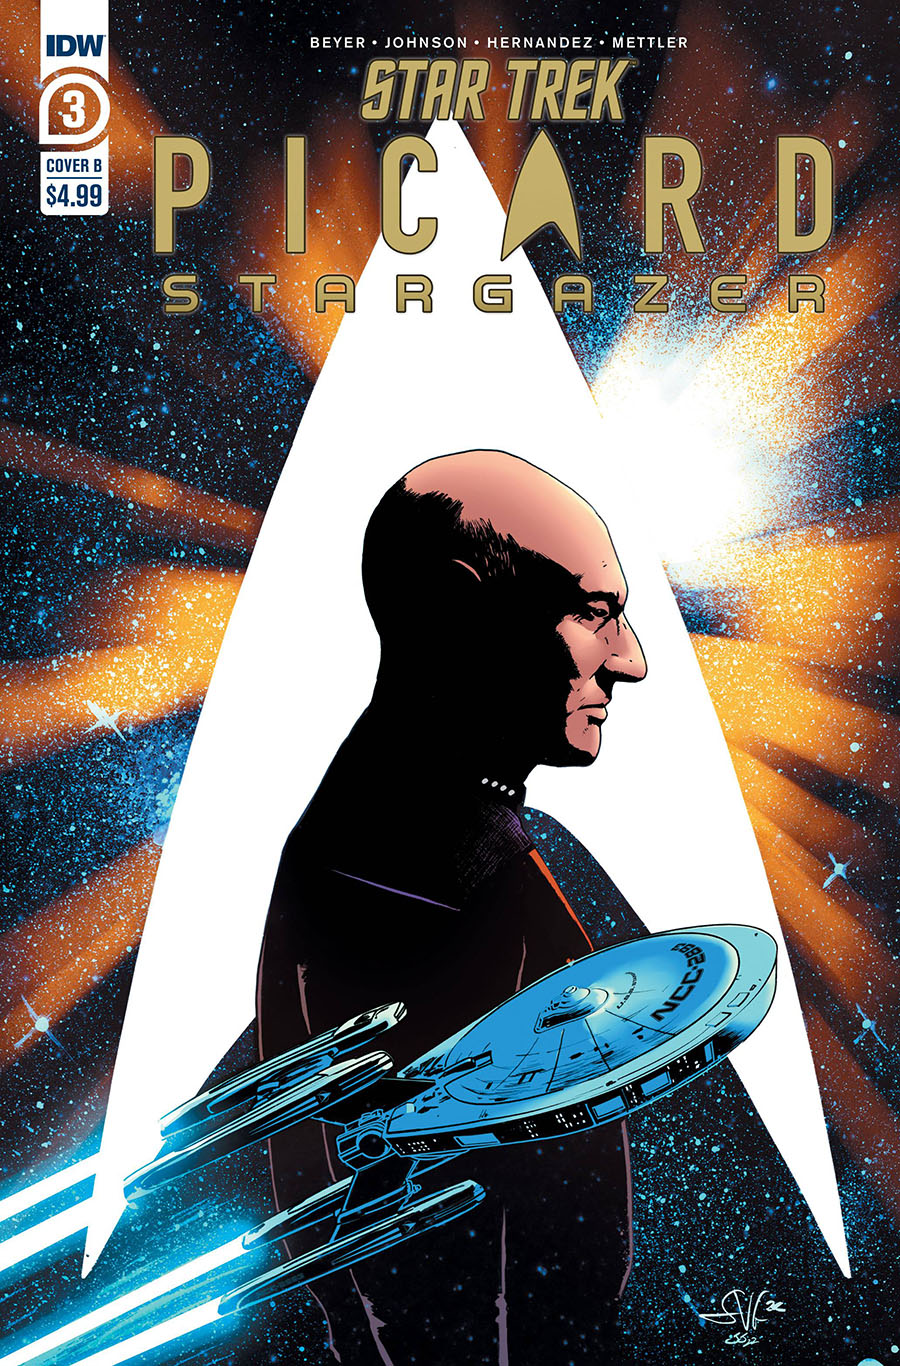 Star Trek Picard Stargazer #3 Cover B Variant Sean Von Gorman Cover